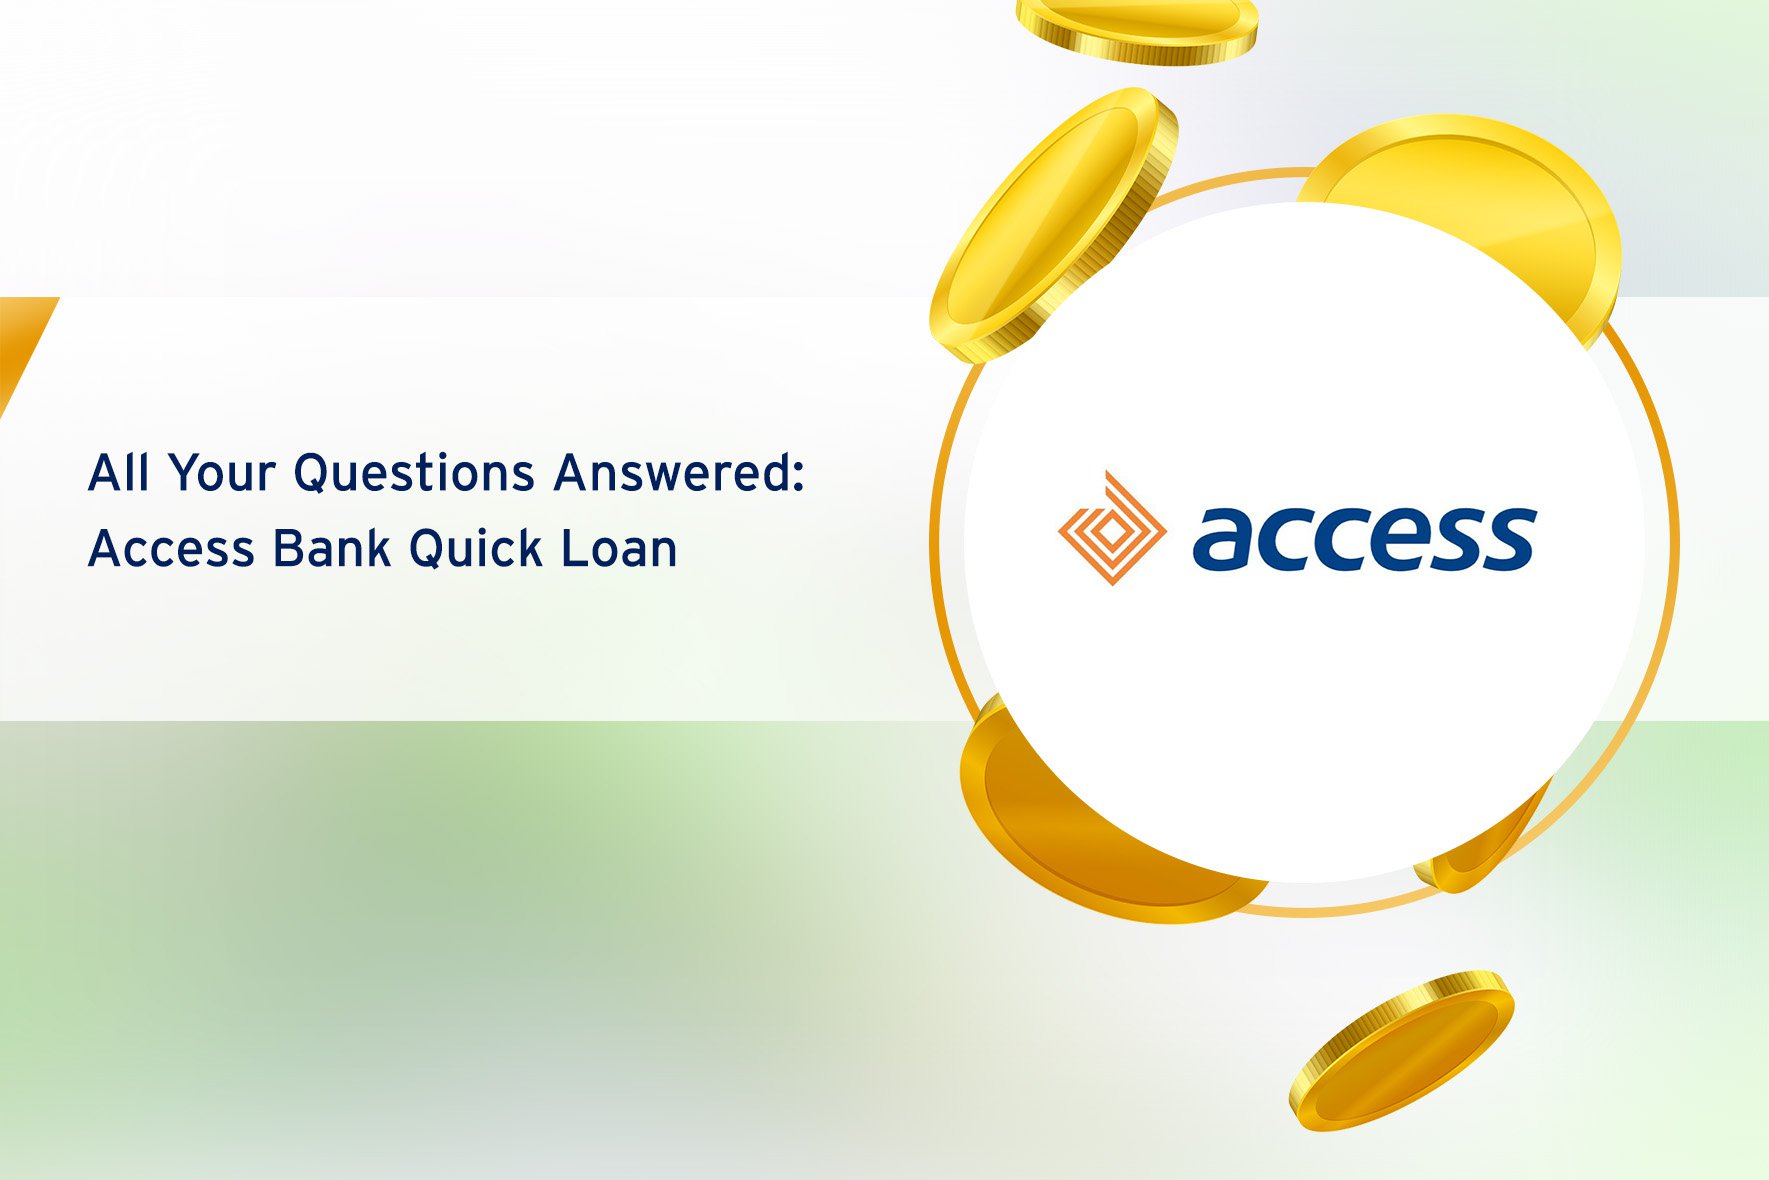 Access Bank Quick Loan